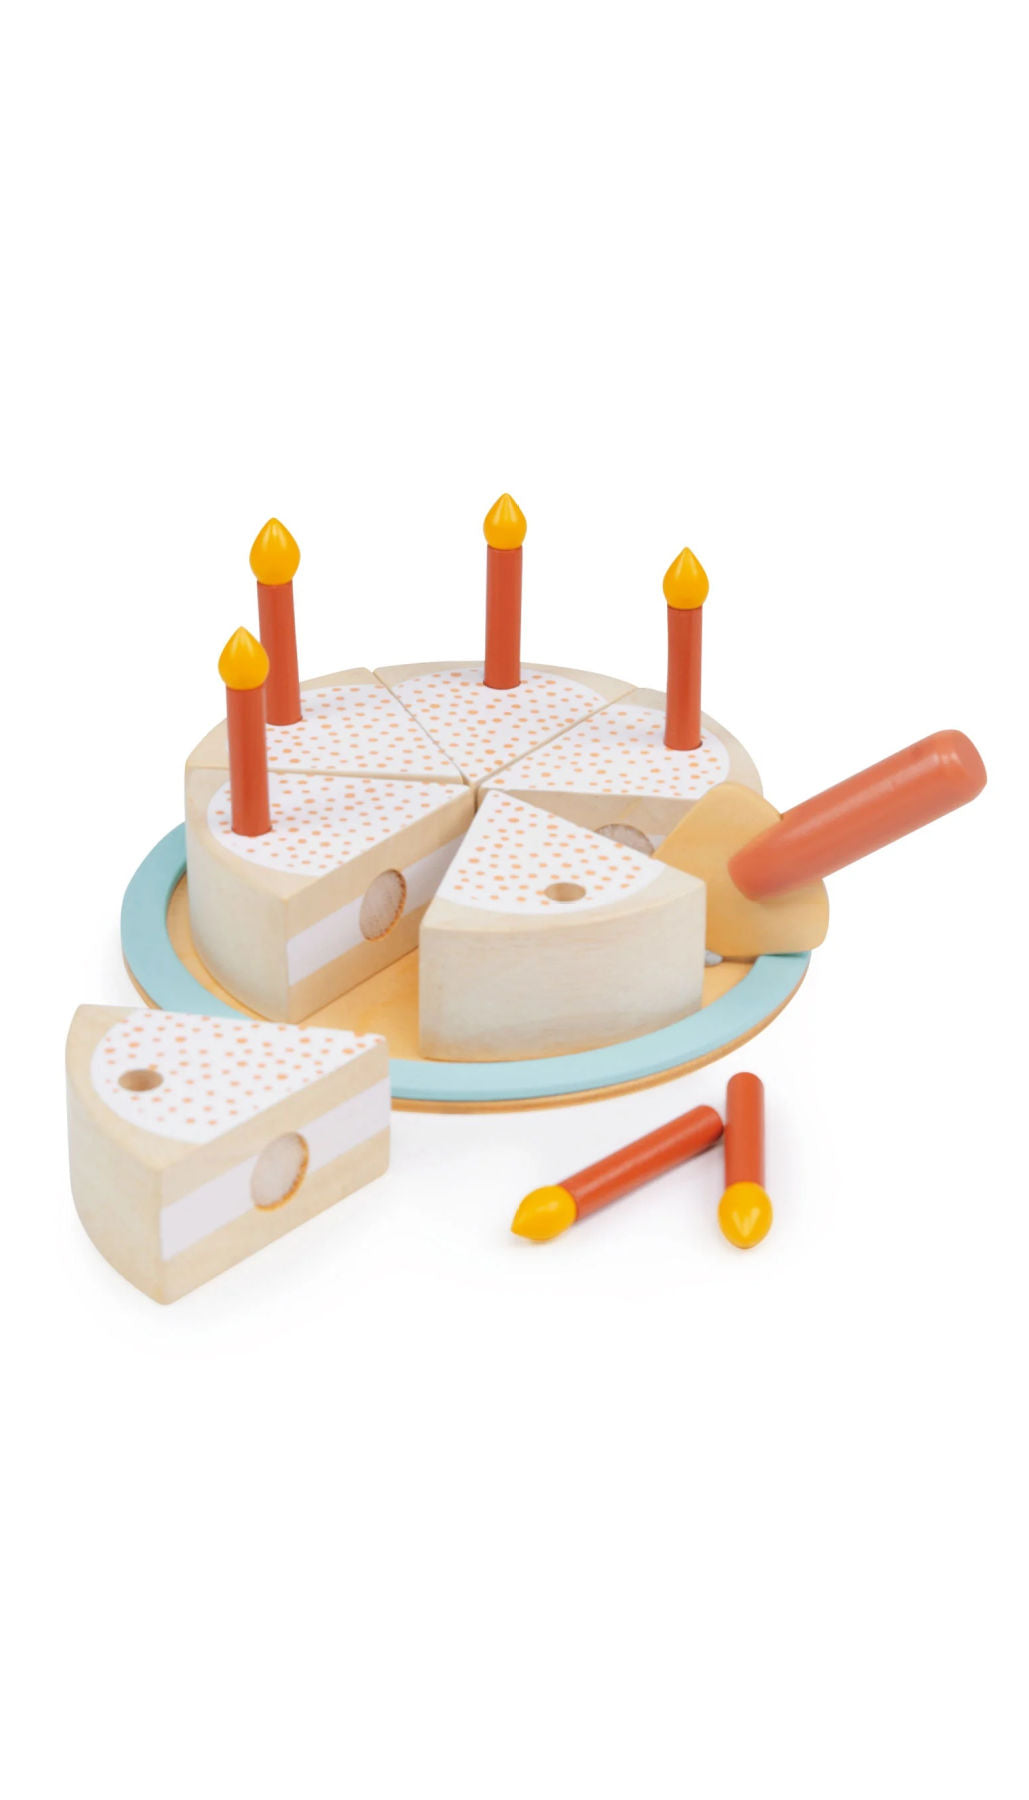 Party Cake Set